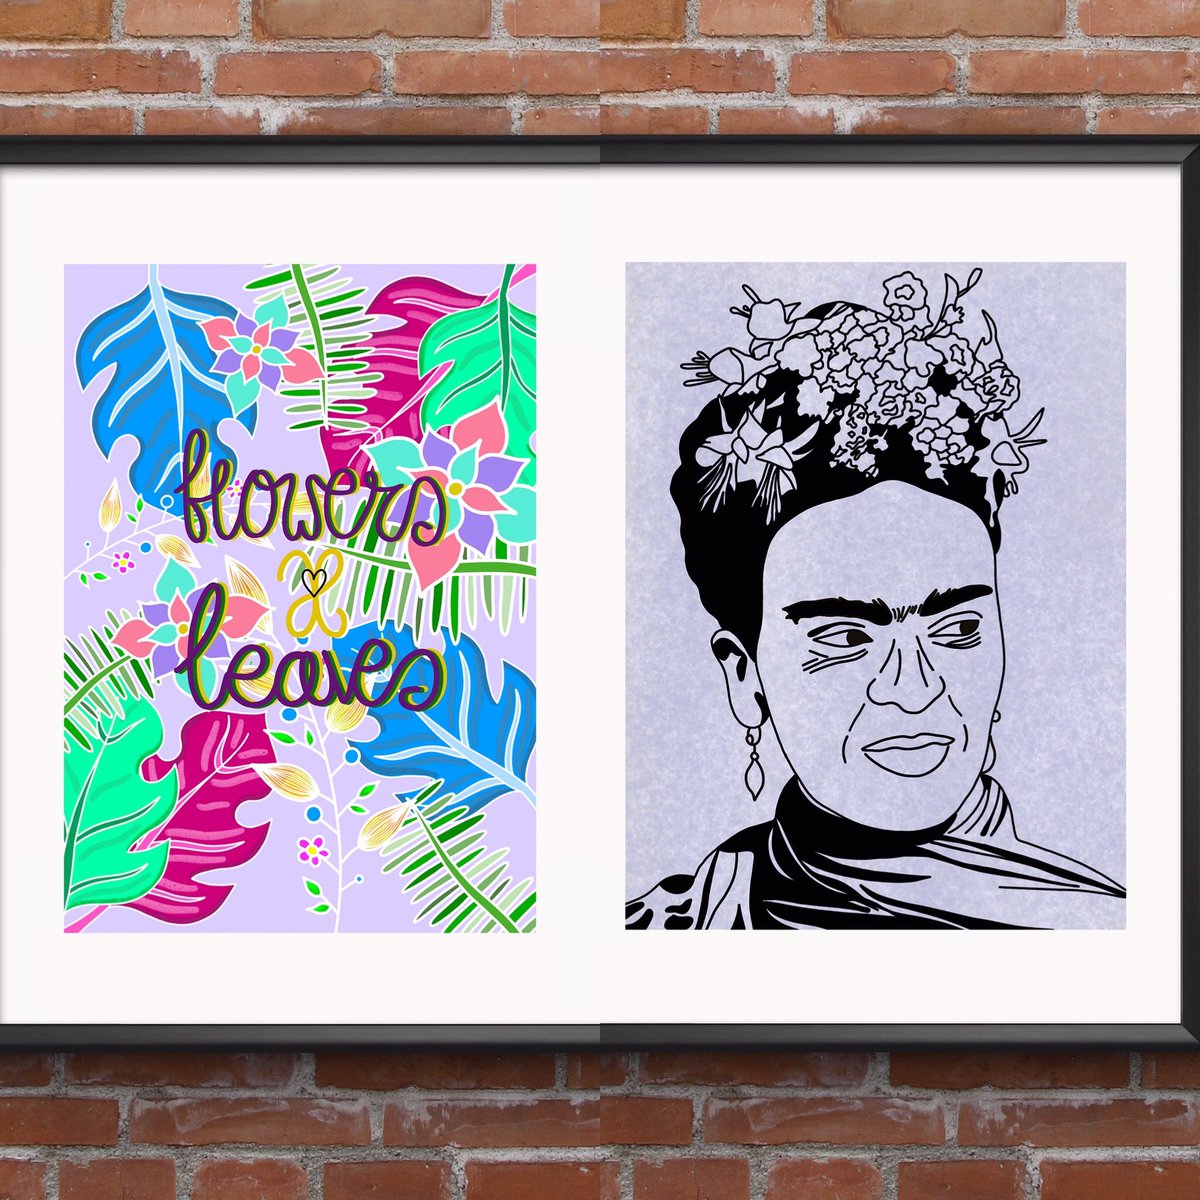 Some new art work this week! Flowers and Frida Kahlo ❤️ Check out my Depop (depop.com/clairescanvas) for more prints! #fridakahloart #fridakahlo #flowers #floralart #colourfulart #colourfulartwork #digitalillustration #digitaldrawing #smallbusiness #commissionsopen